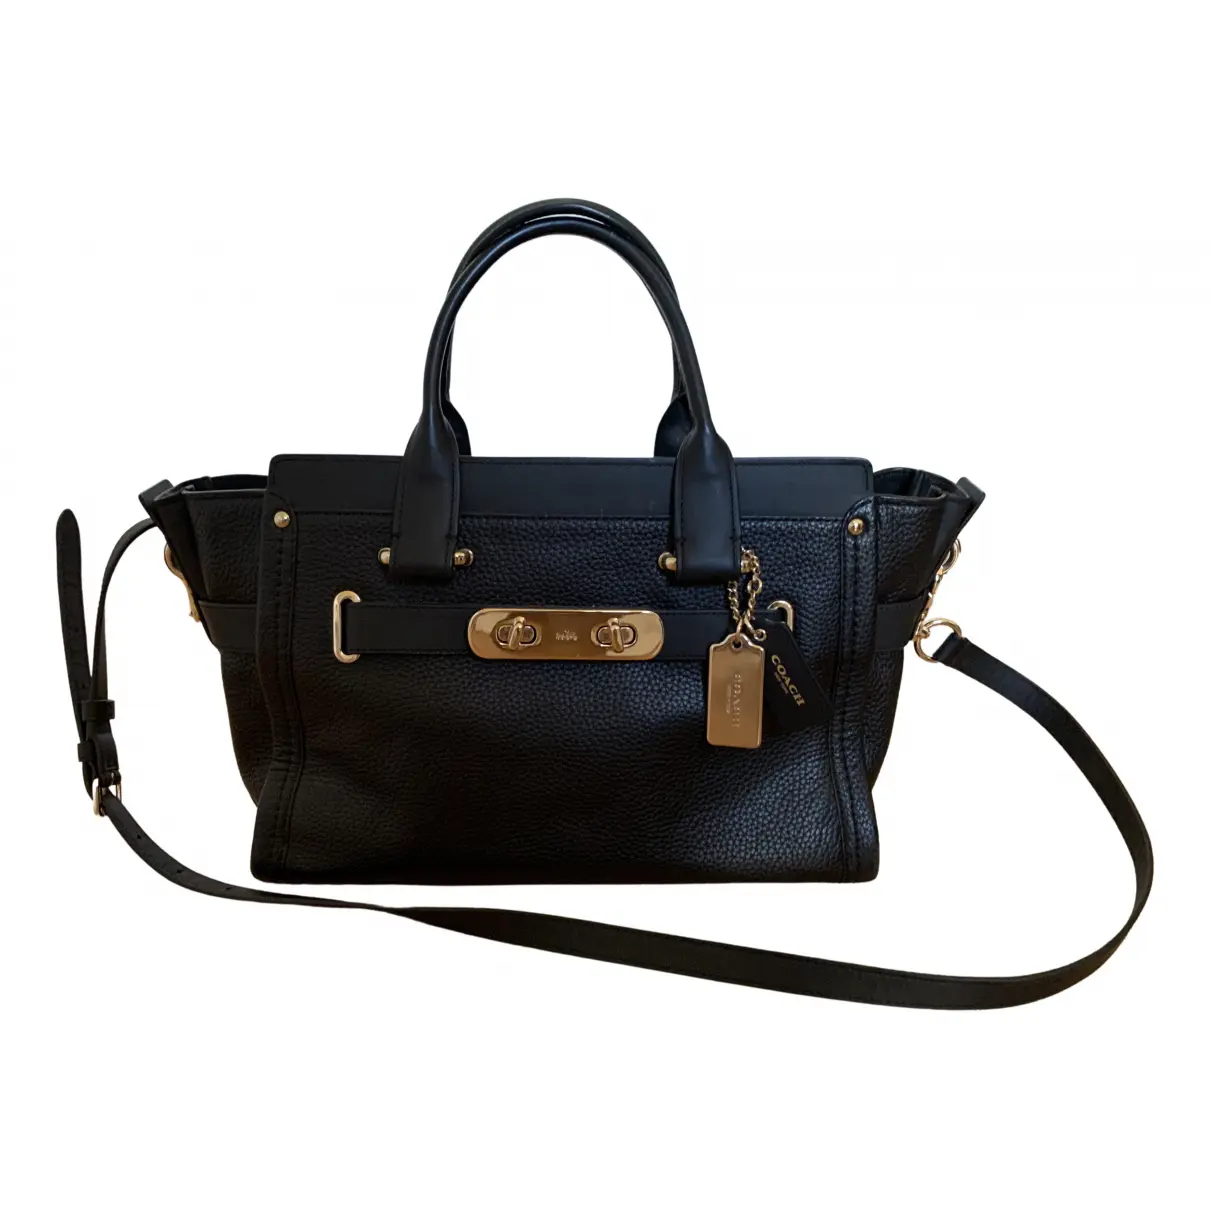 Gramercy Satchel leather handbag Coach